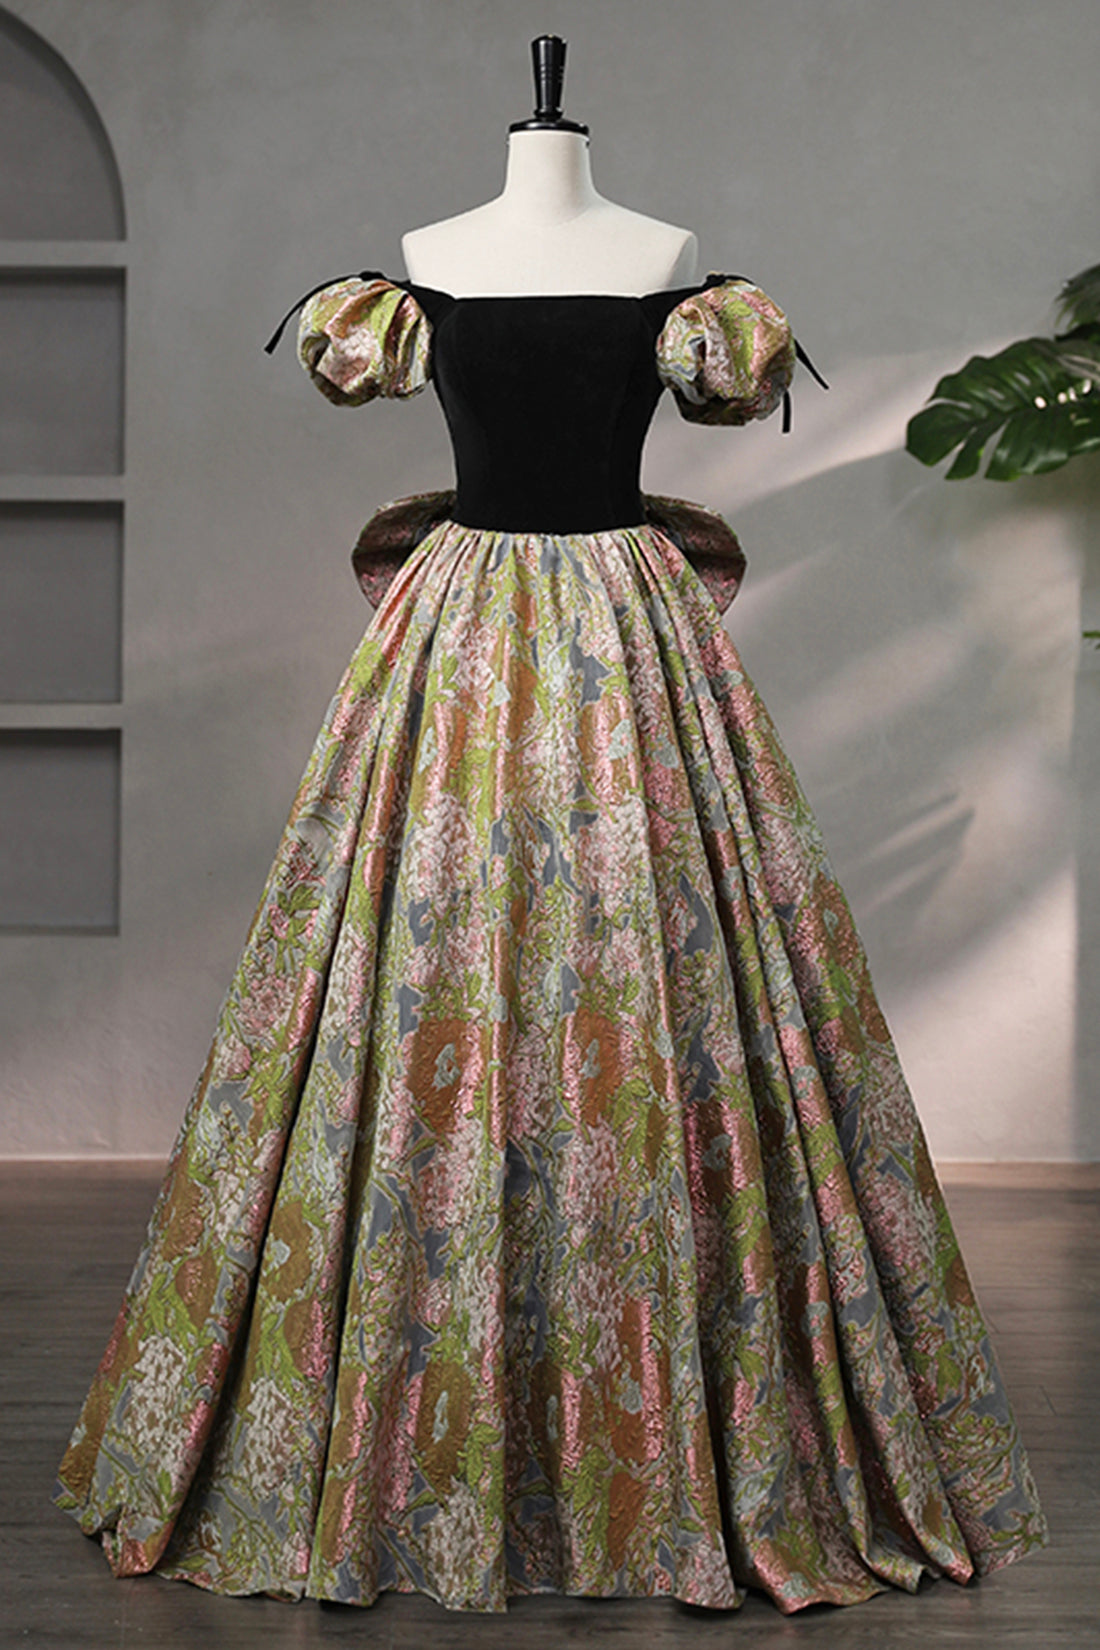 Elegant Black Puffy Short Sleeve Floor Length Prom Dress, A-Line Floral Pattern Evening Dress